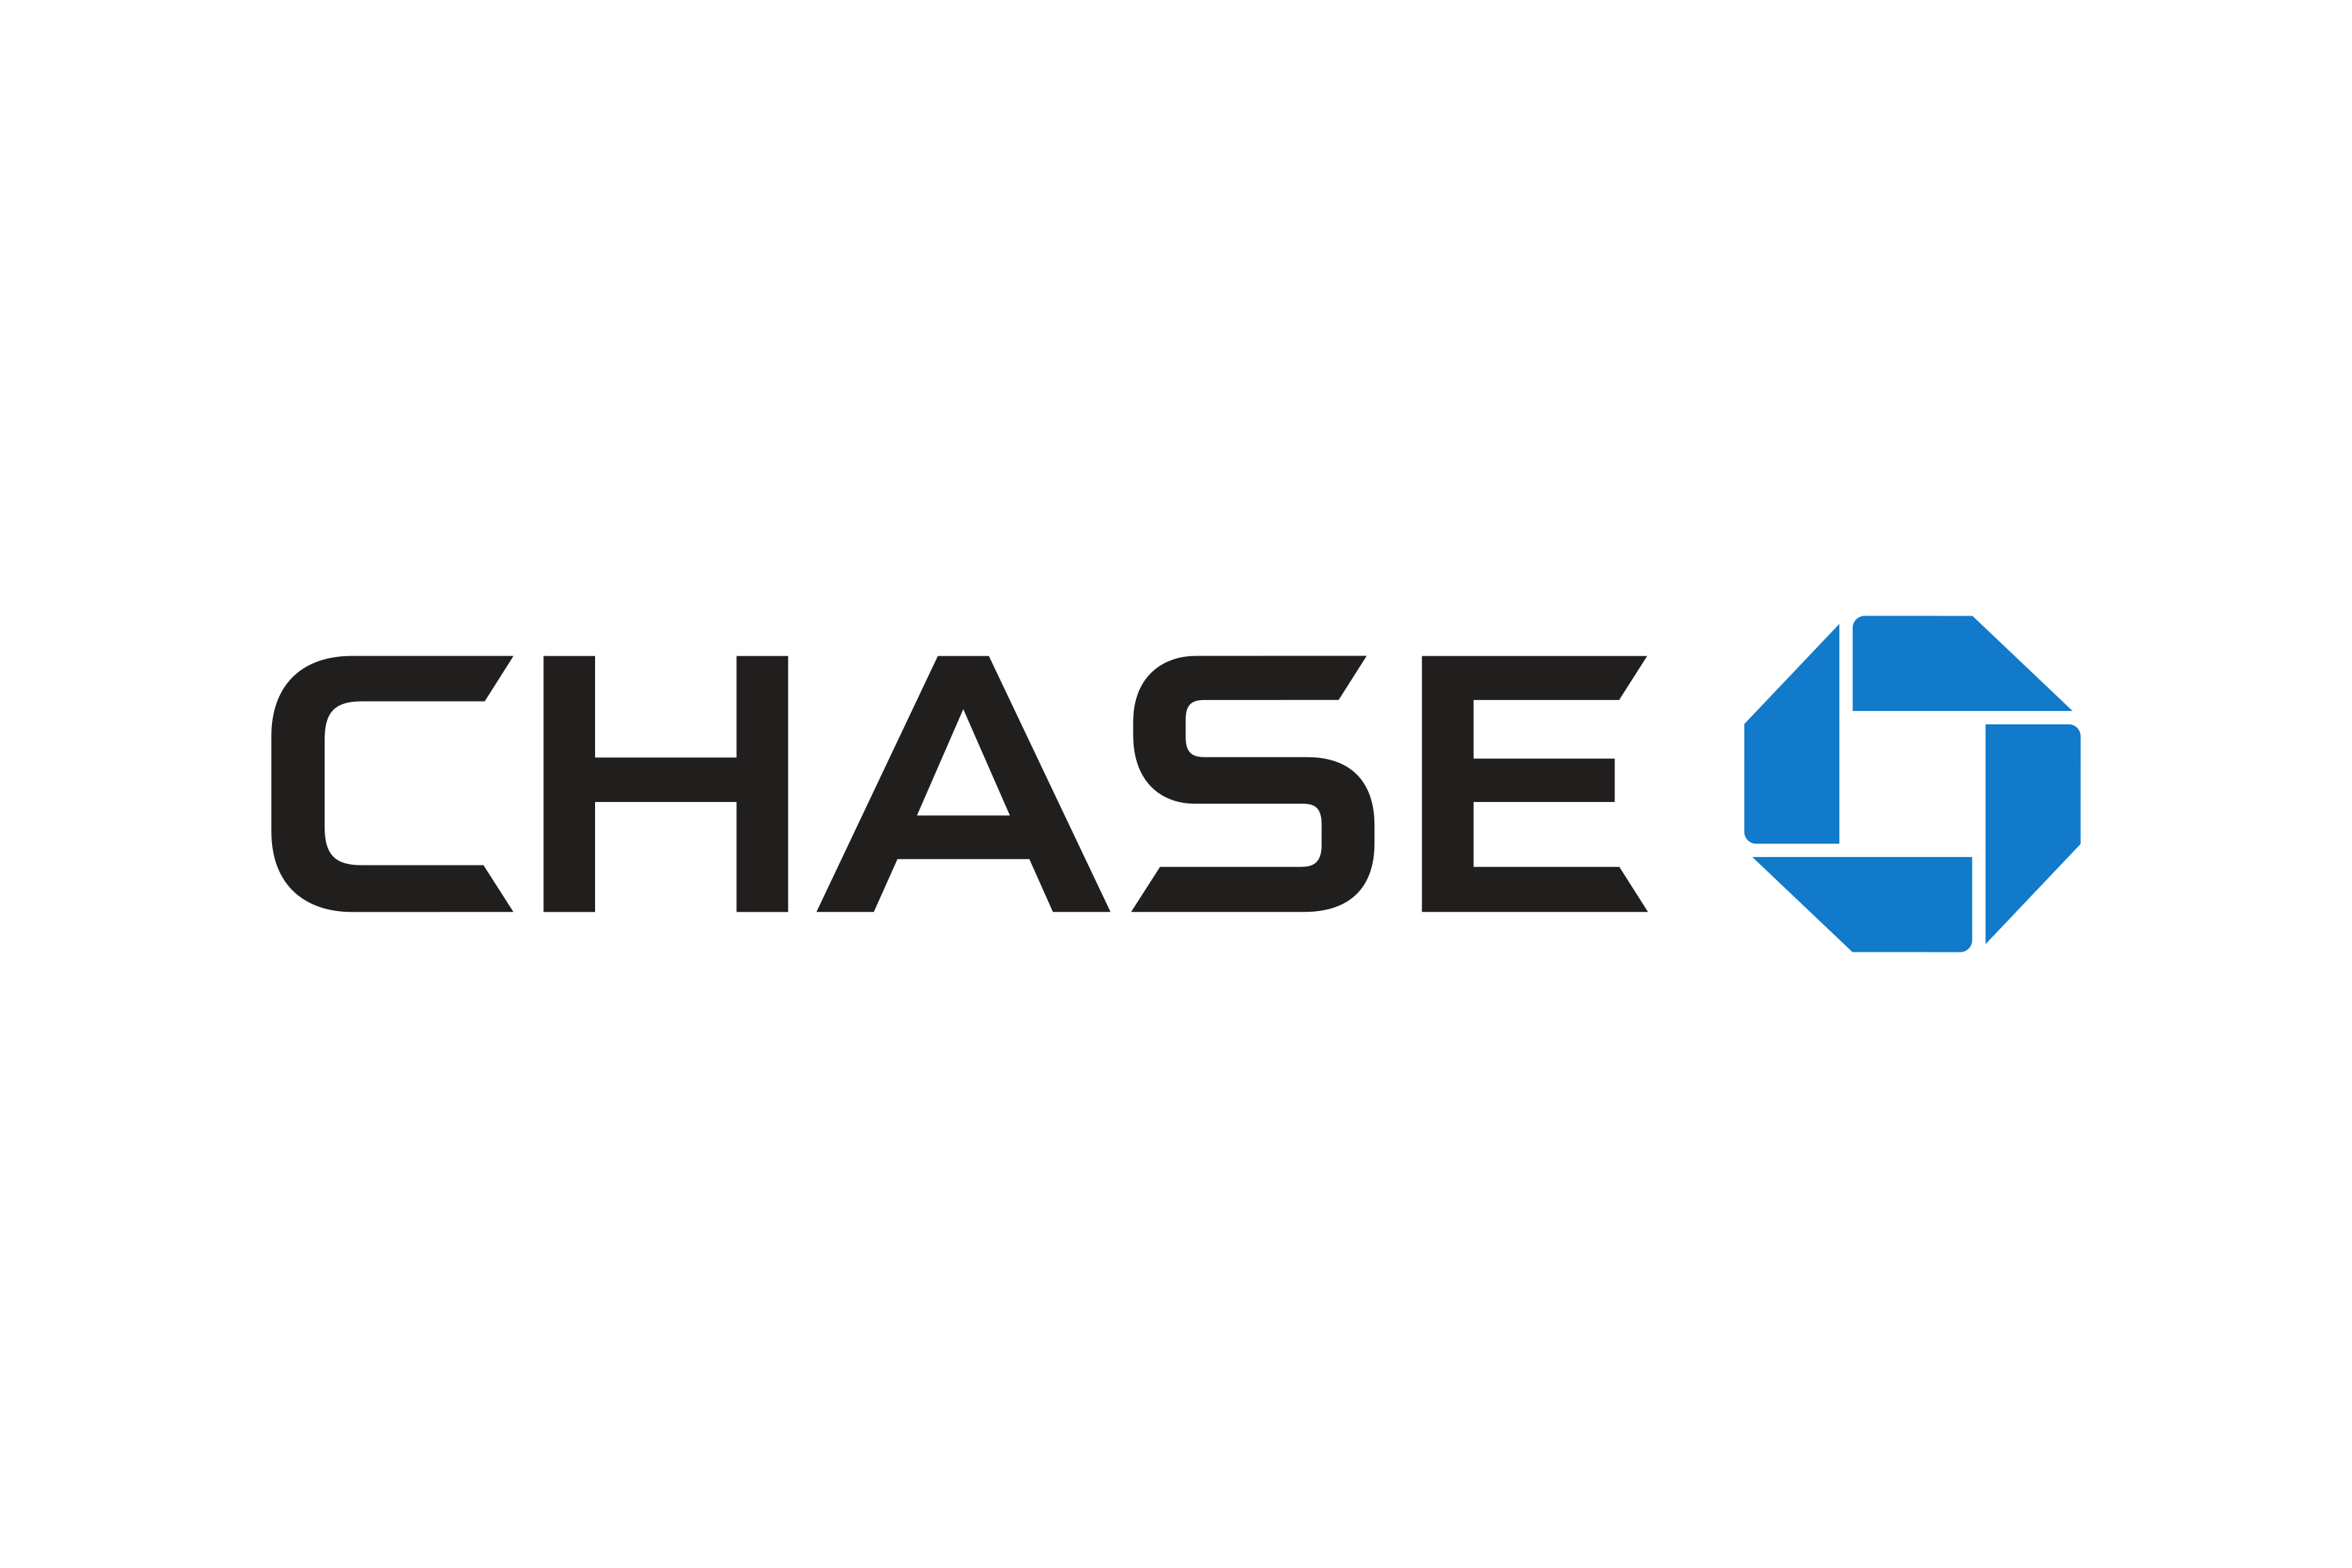 Download Chase Bank Logo in SVG Vector or PNG File Format - Logo.wine